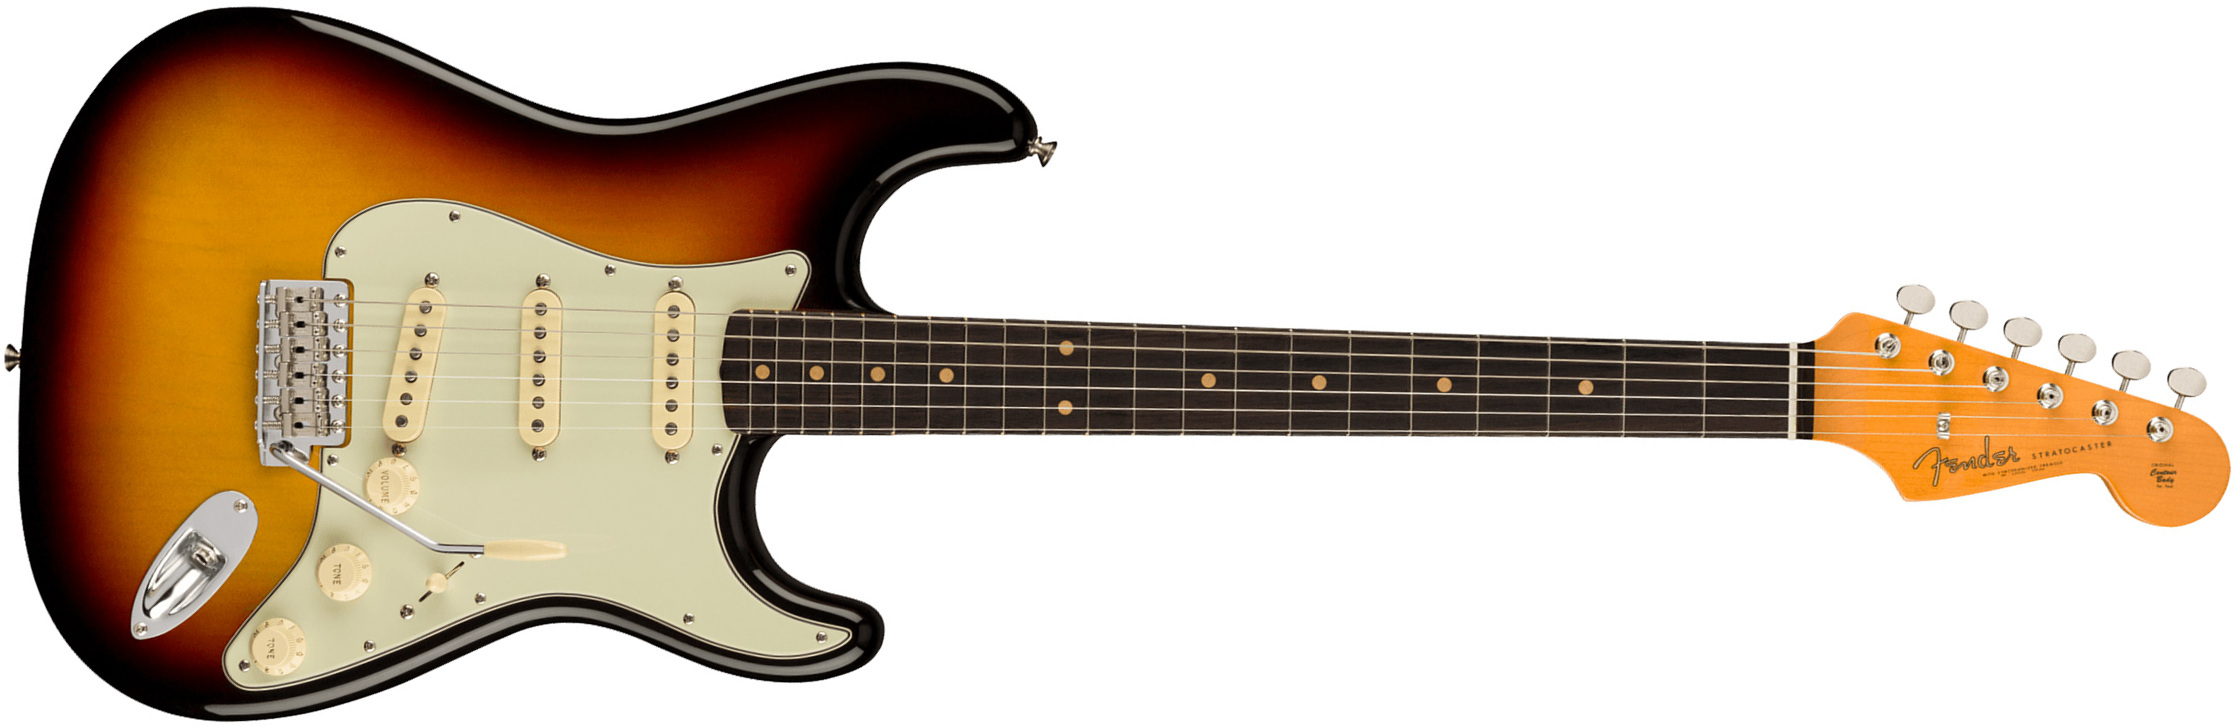 Fender Strat 1961 American Vintage Ii Usa 3s Trem Rw - 3-color Sunburst - Str shape electric guitar - Main picture